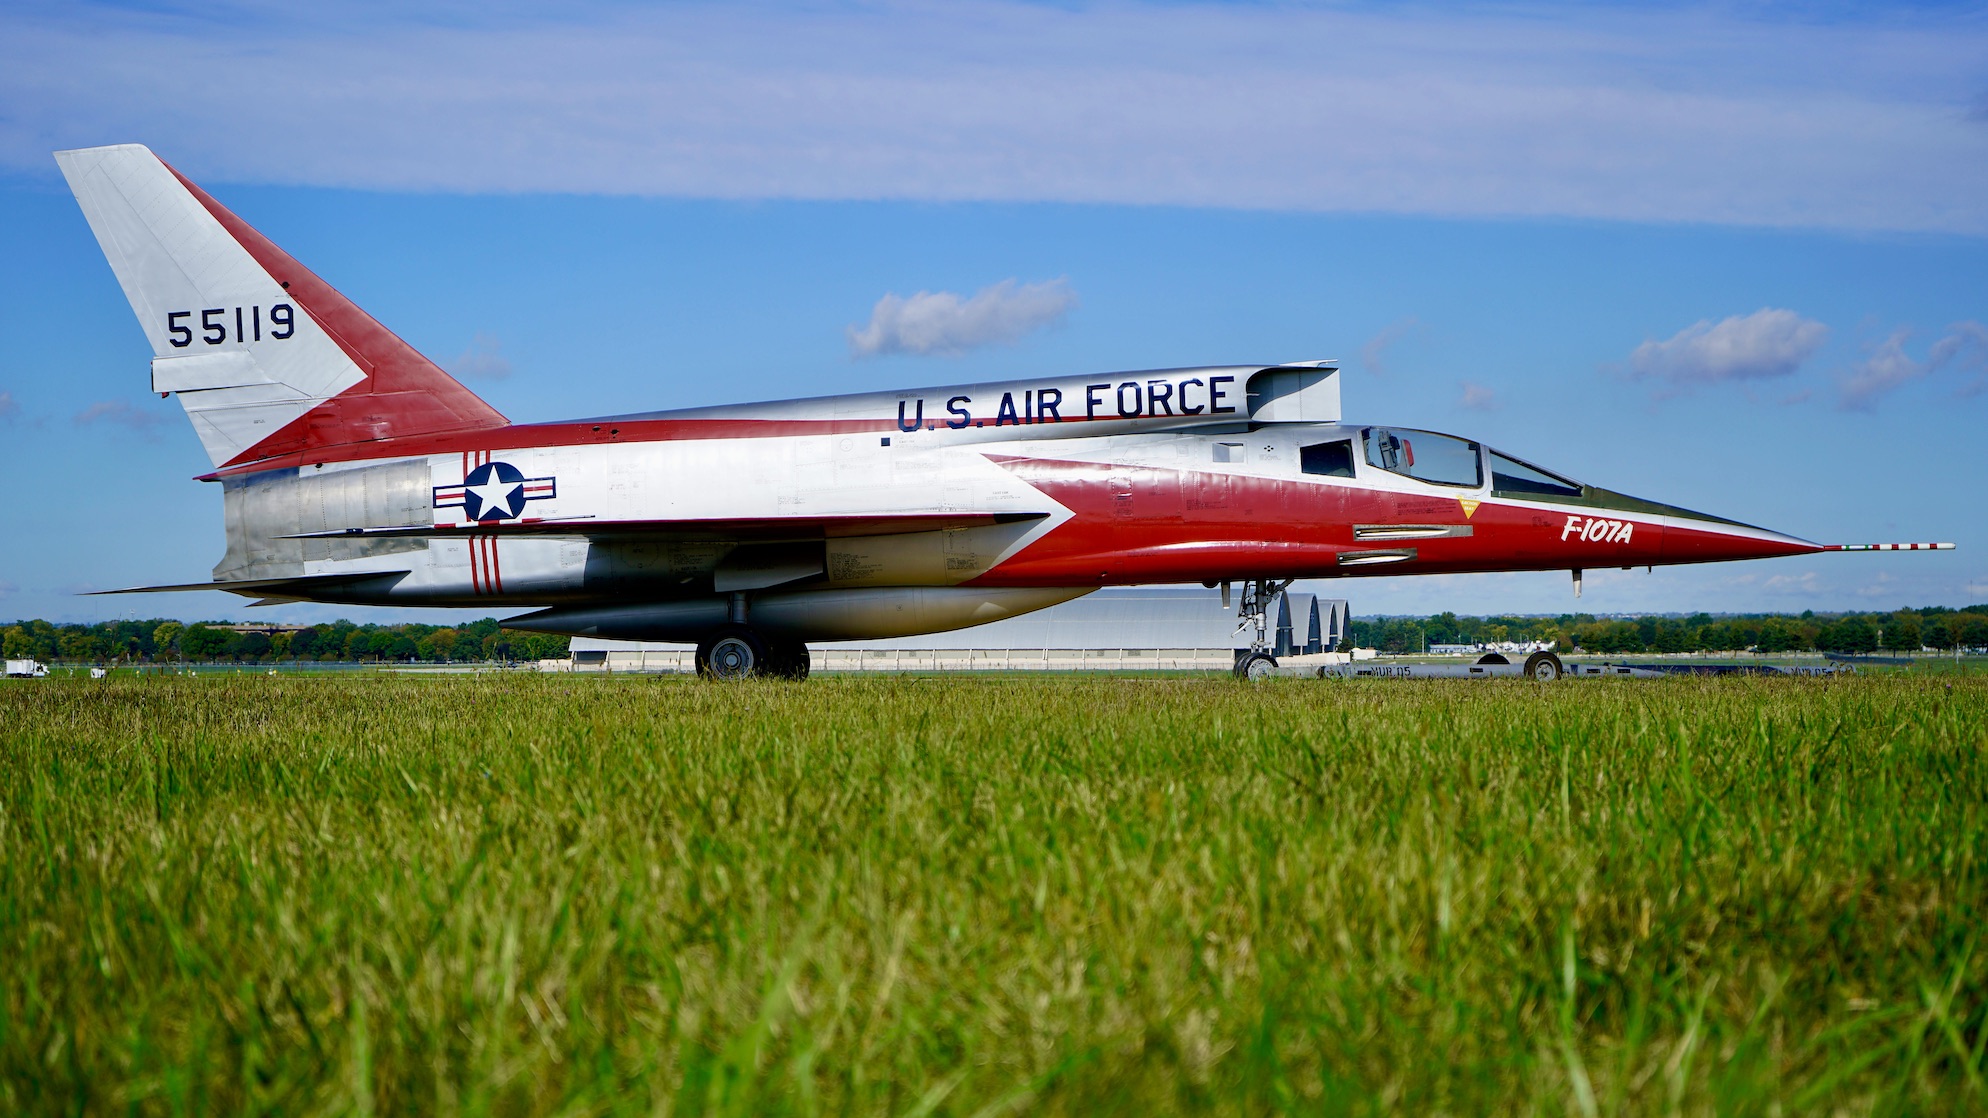 North American F-107: The Super Sabre